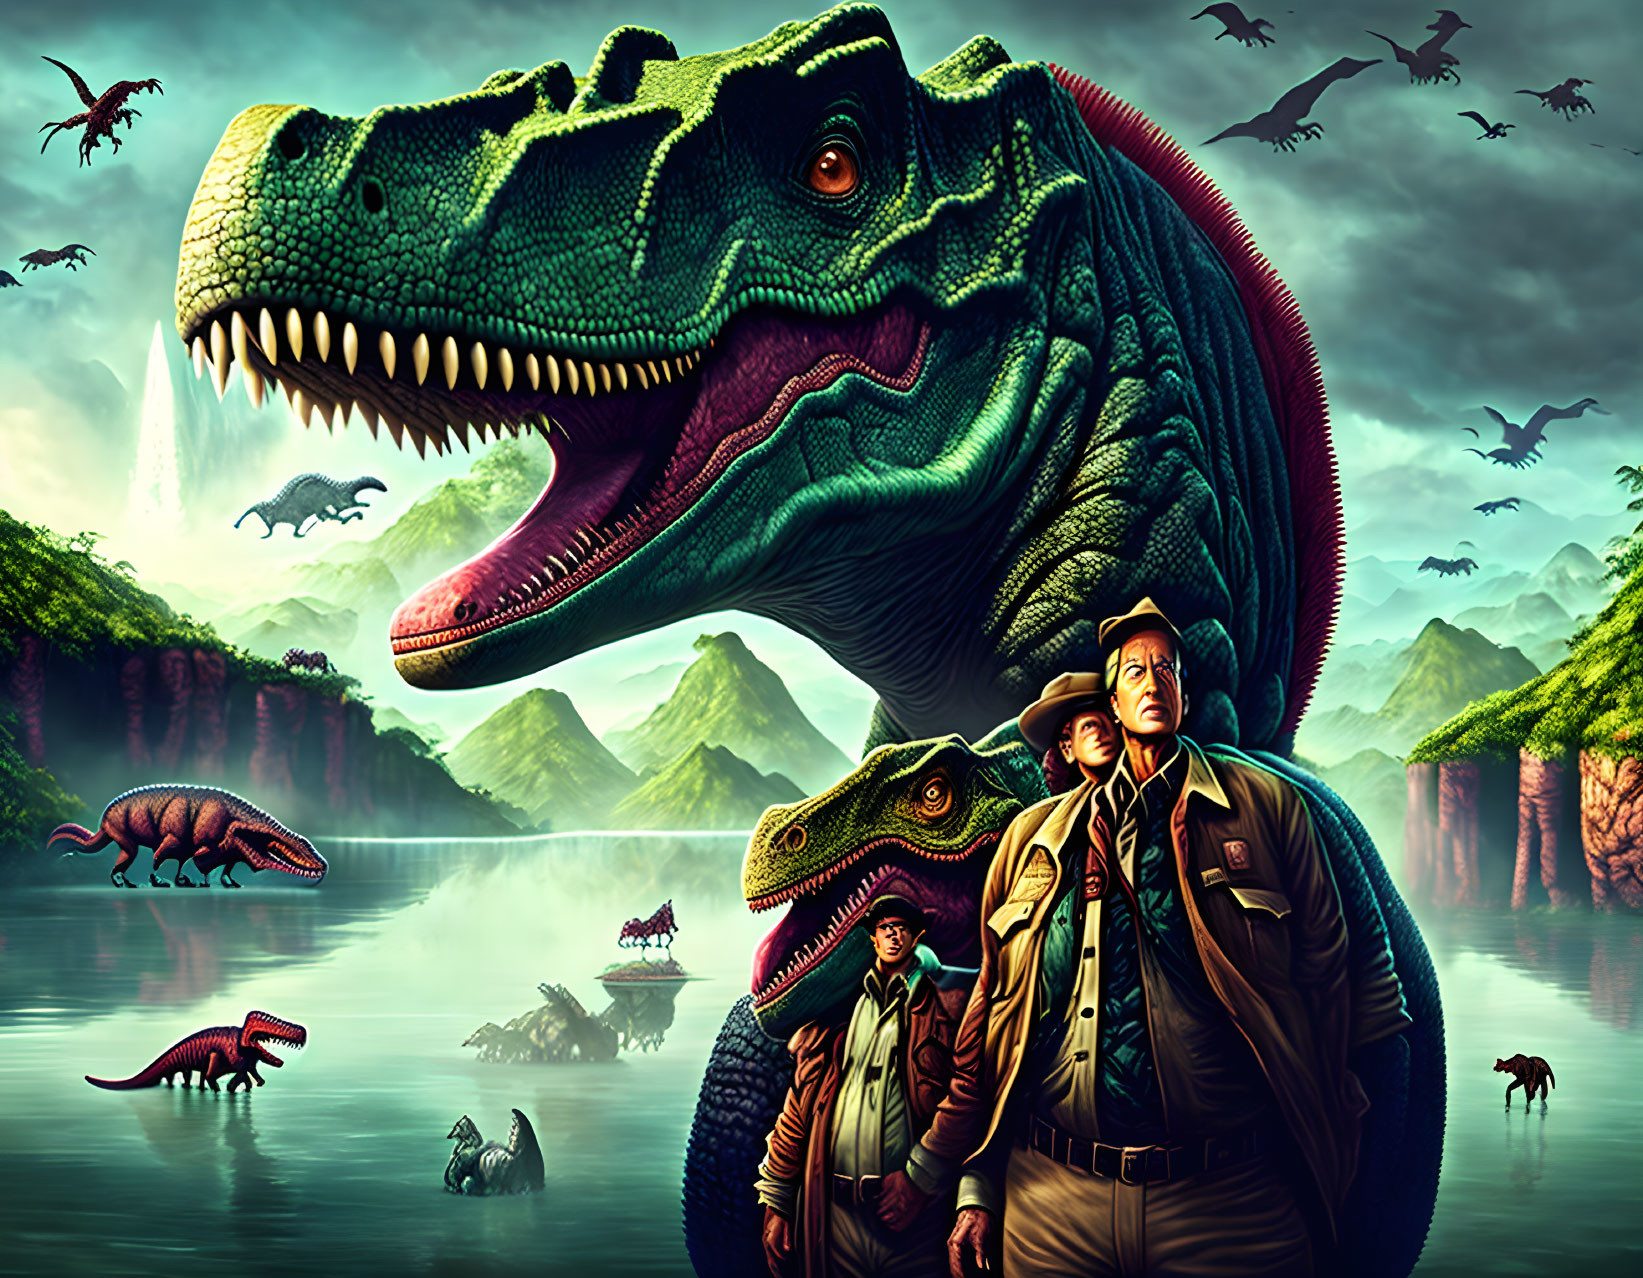 Detailed prehistoric scene with T-Rex, smaller dinosaurs, adventurers, misty landscape.